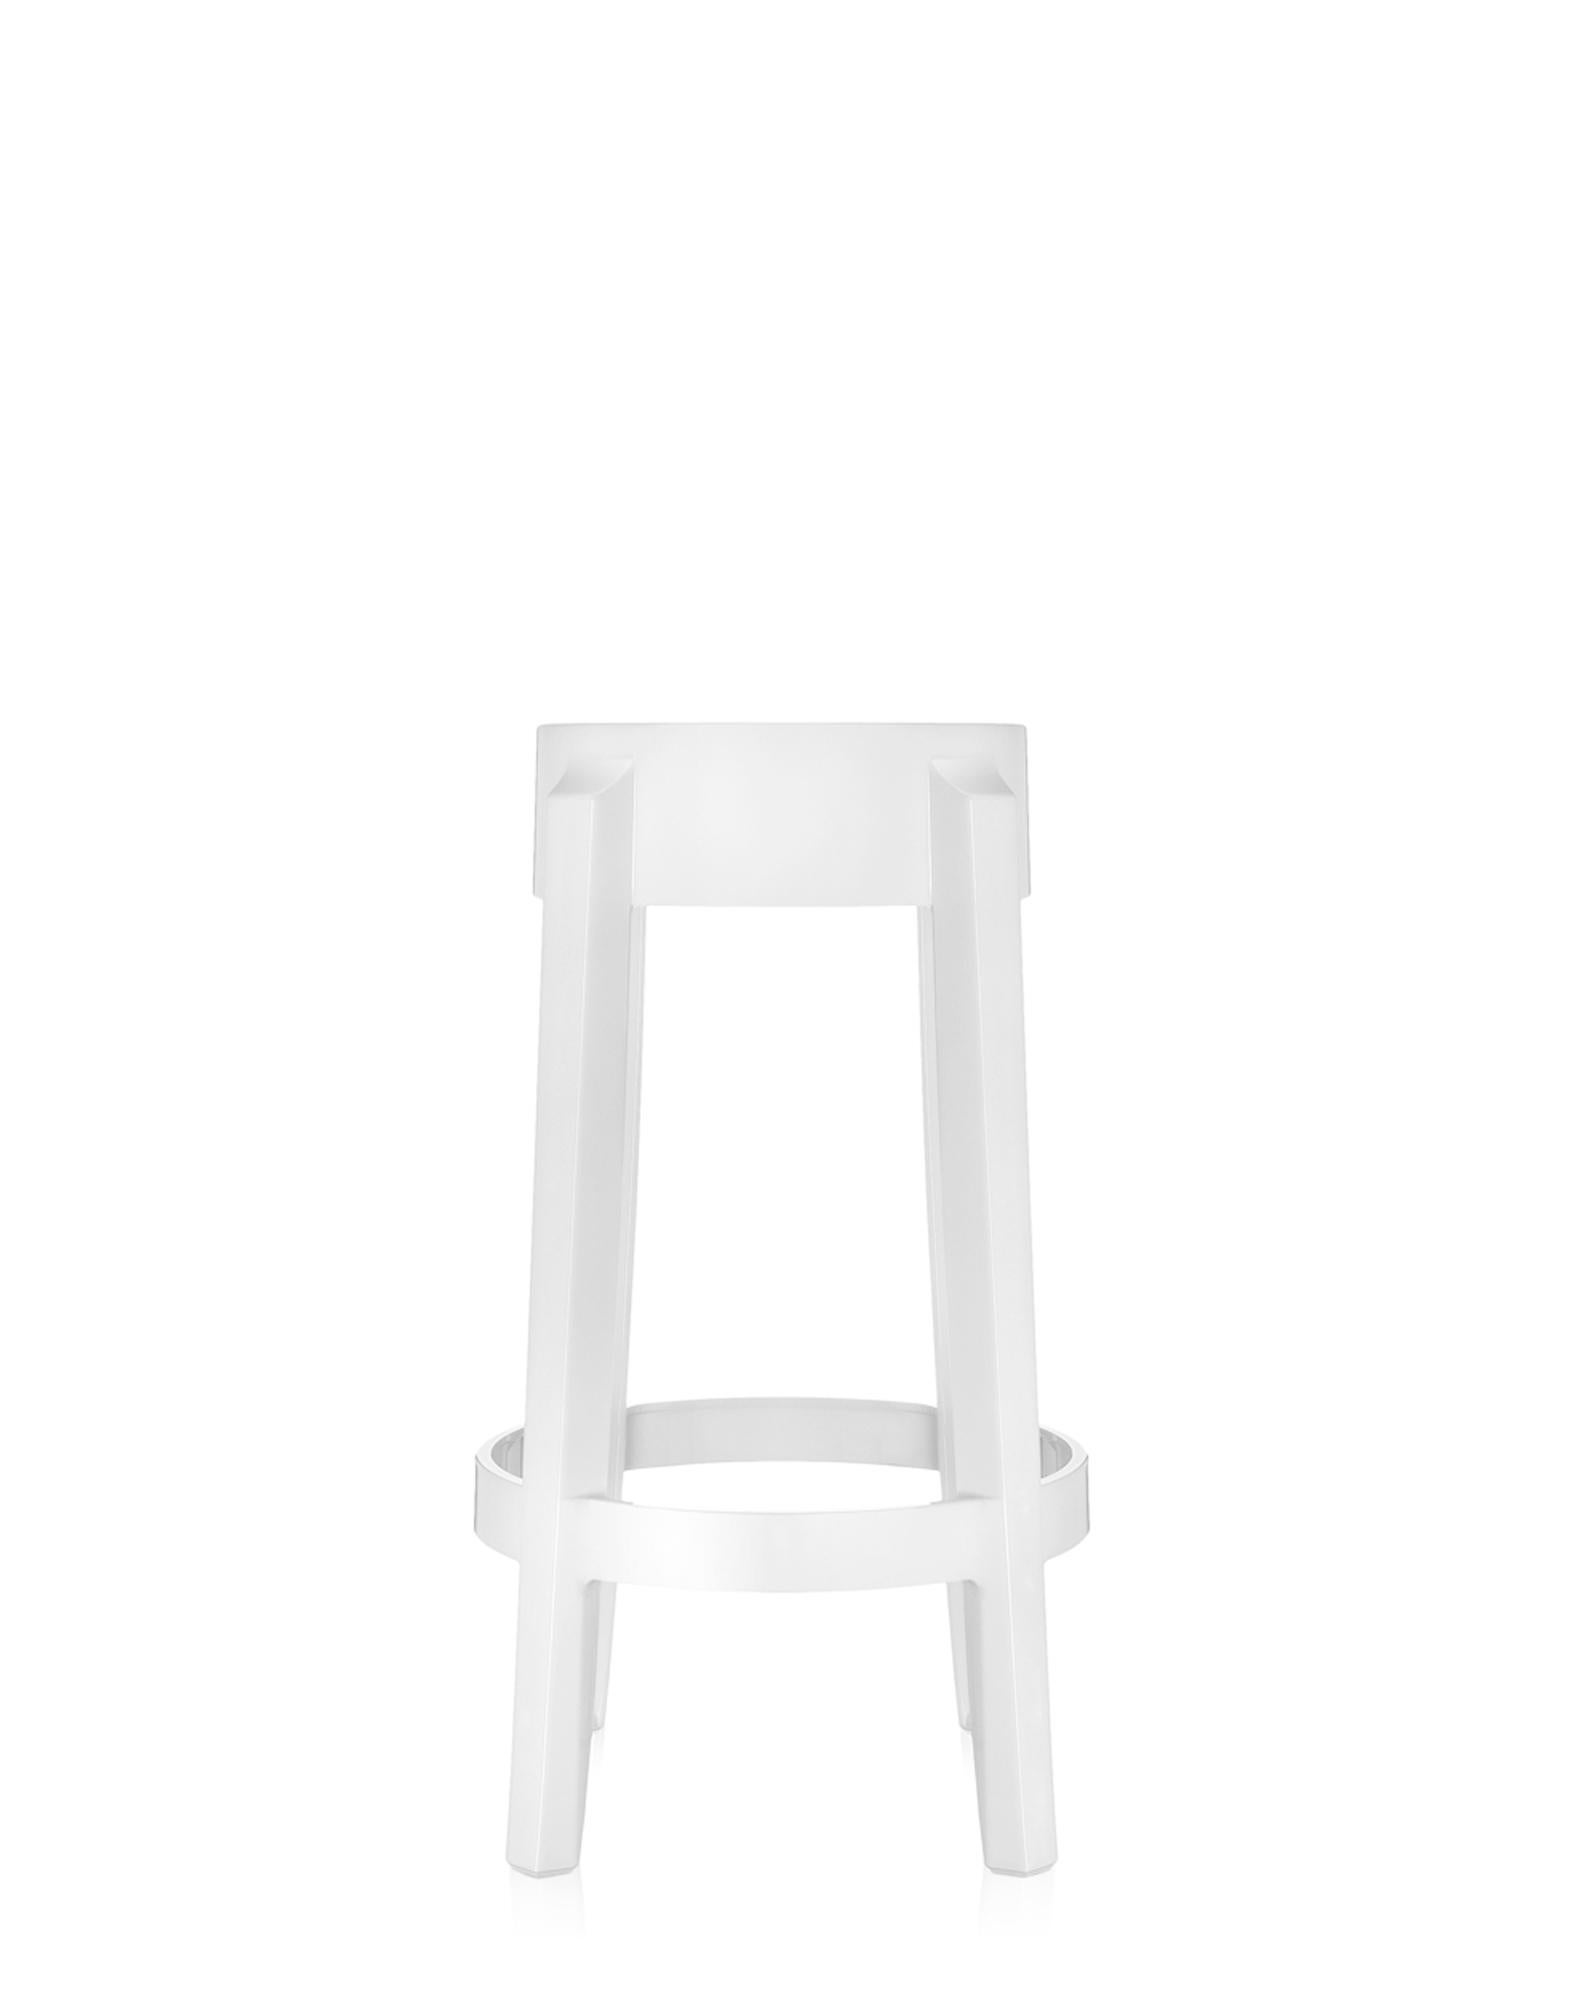 charles ghost stool